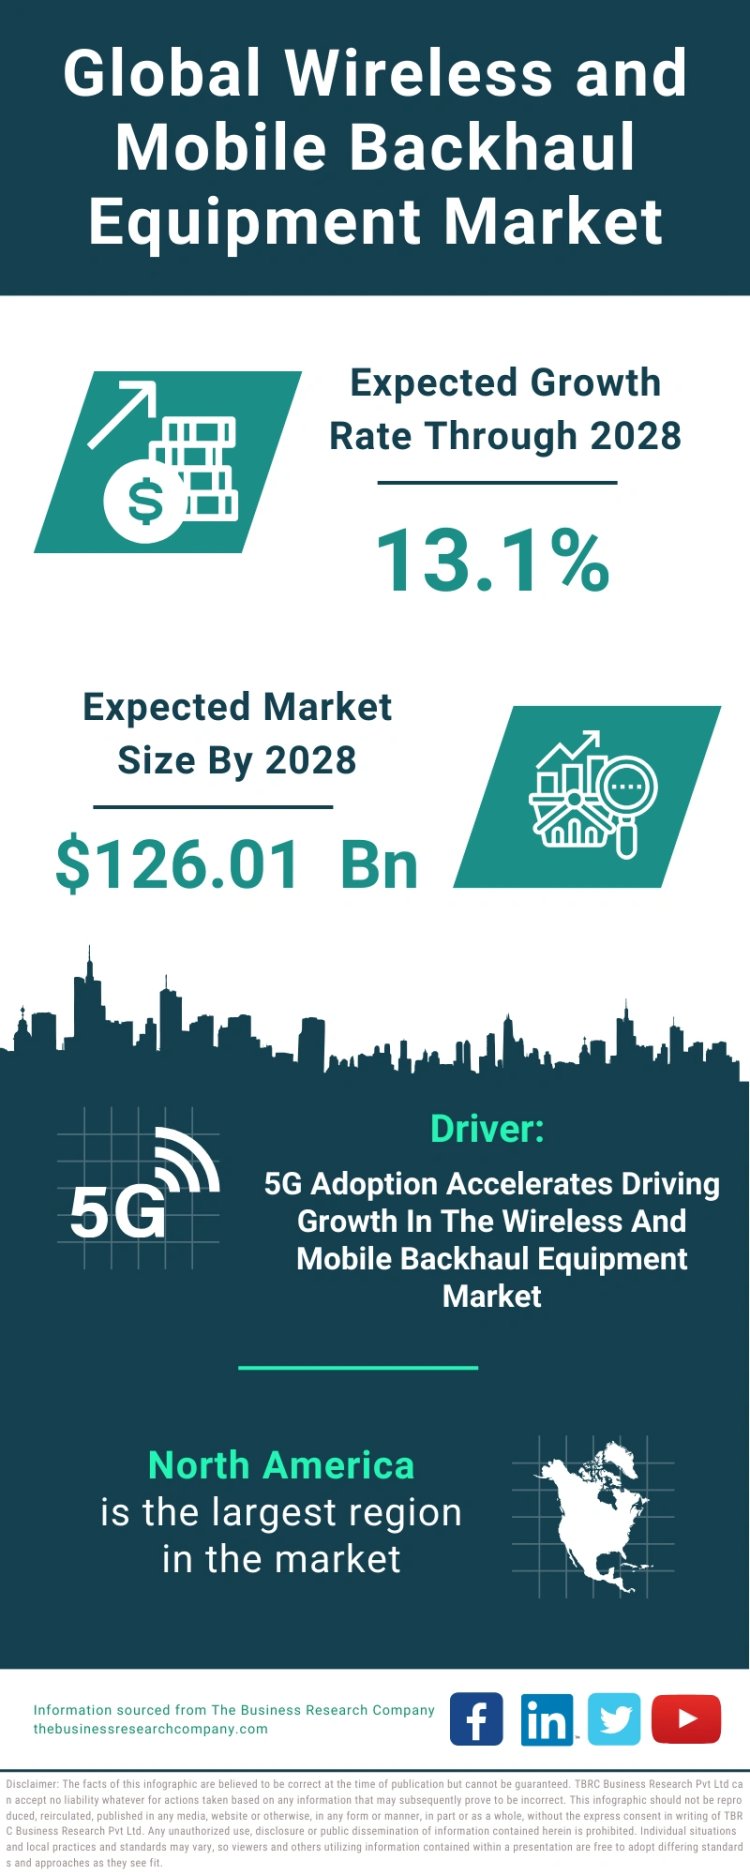 Wireless and Mobile Backhaul Equipment Market Size, Drivers, Stategeies 2033